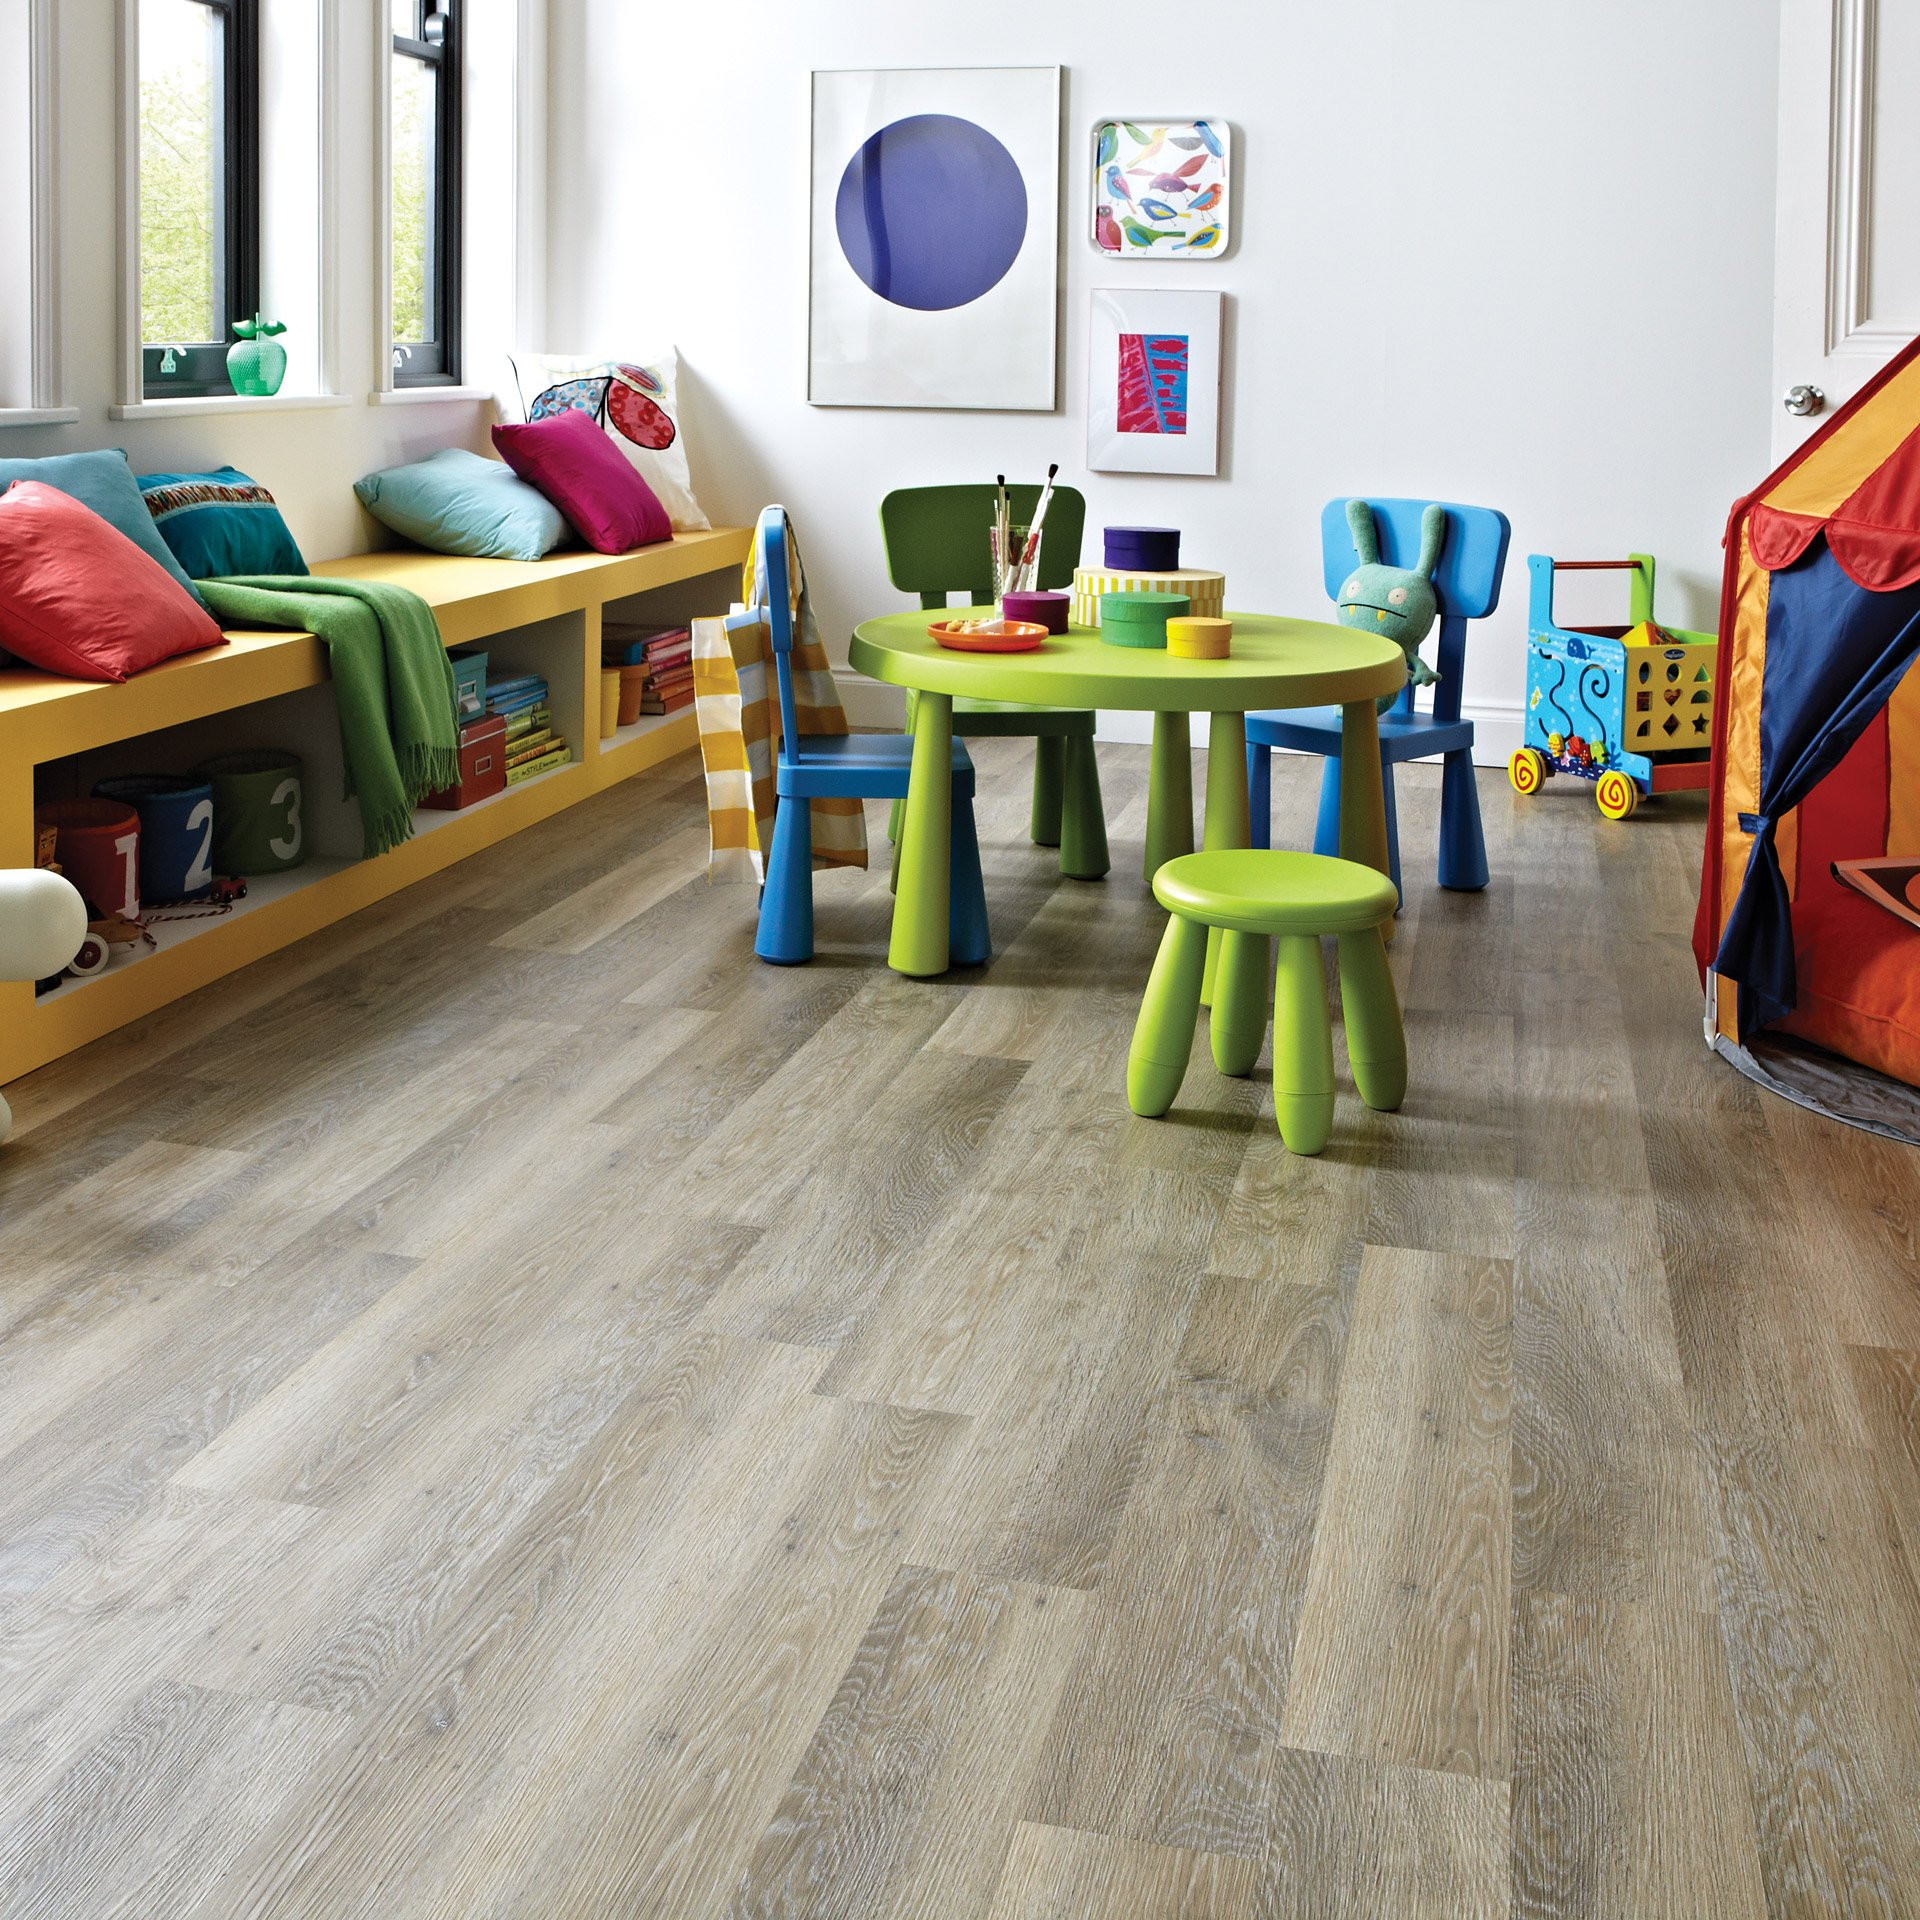 Flooring For Kids Room
 Kids Room Flooring Ideas for Your Home